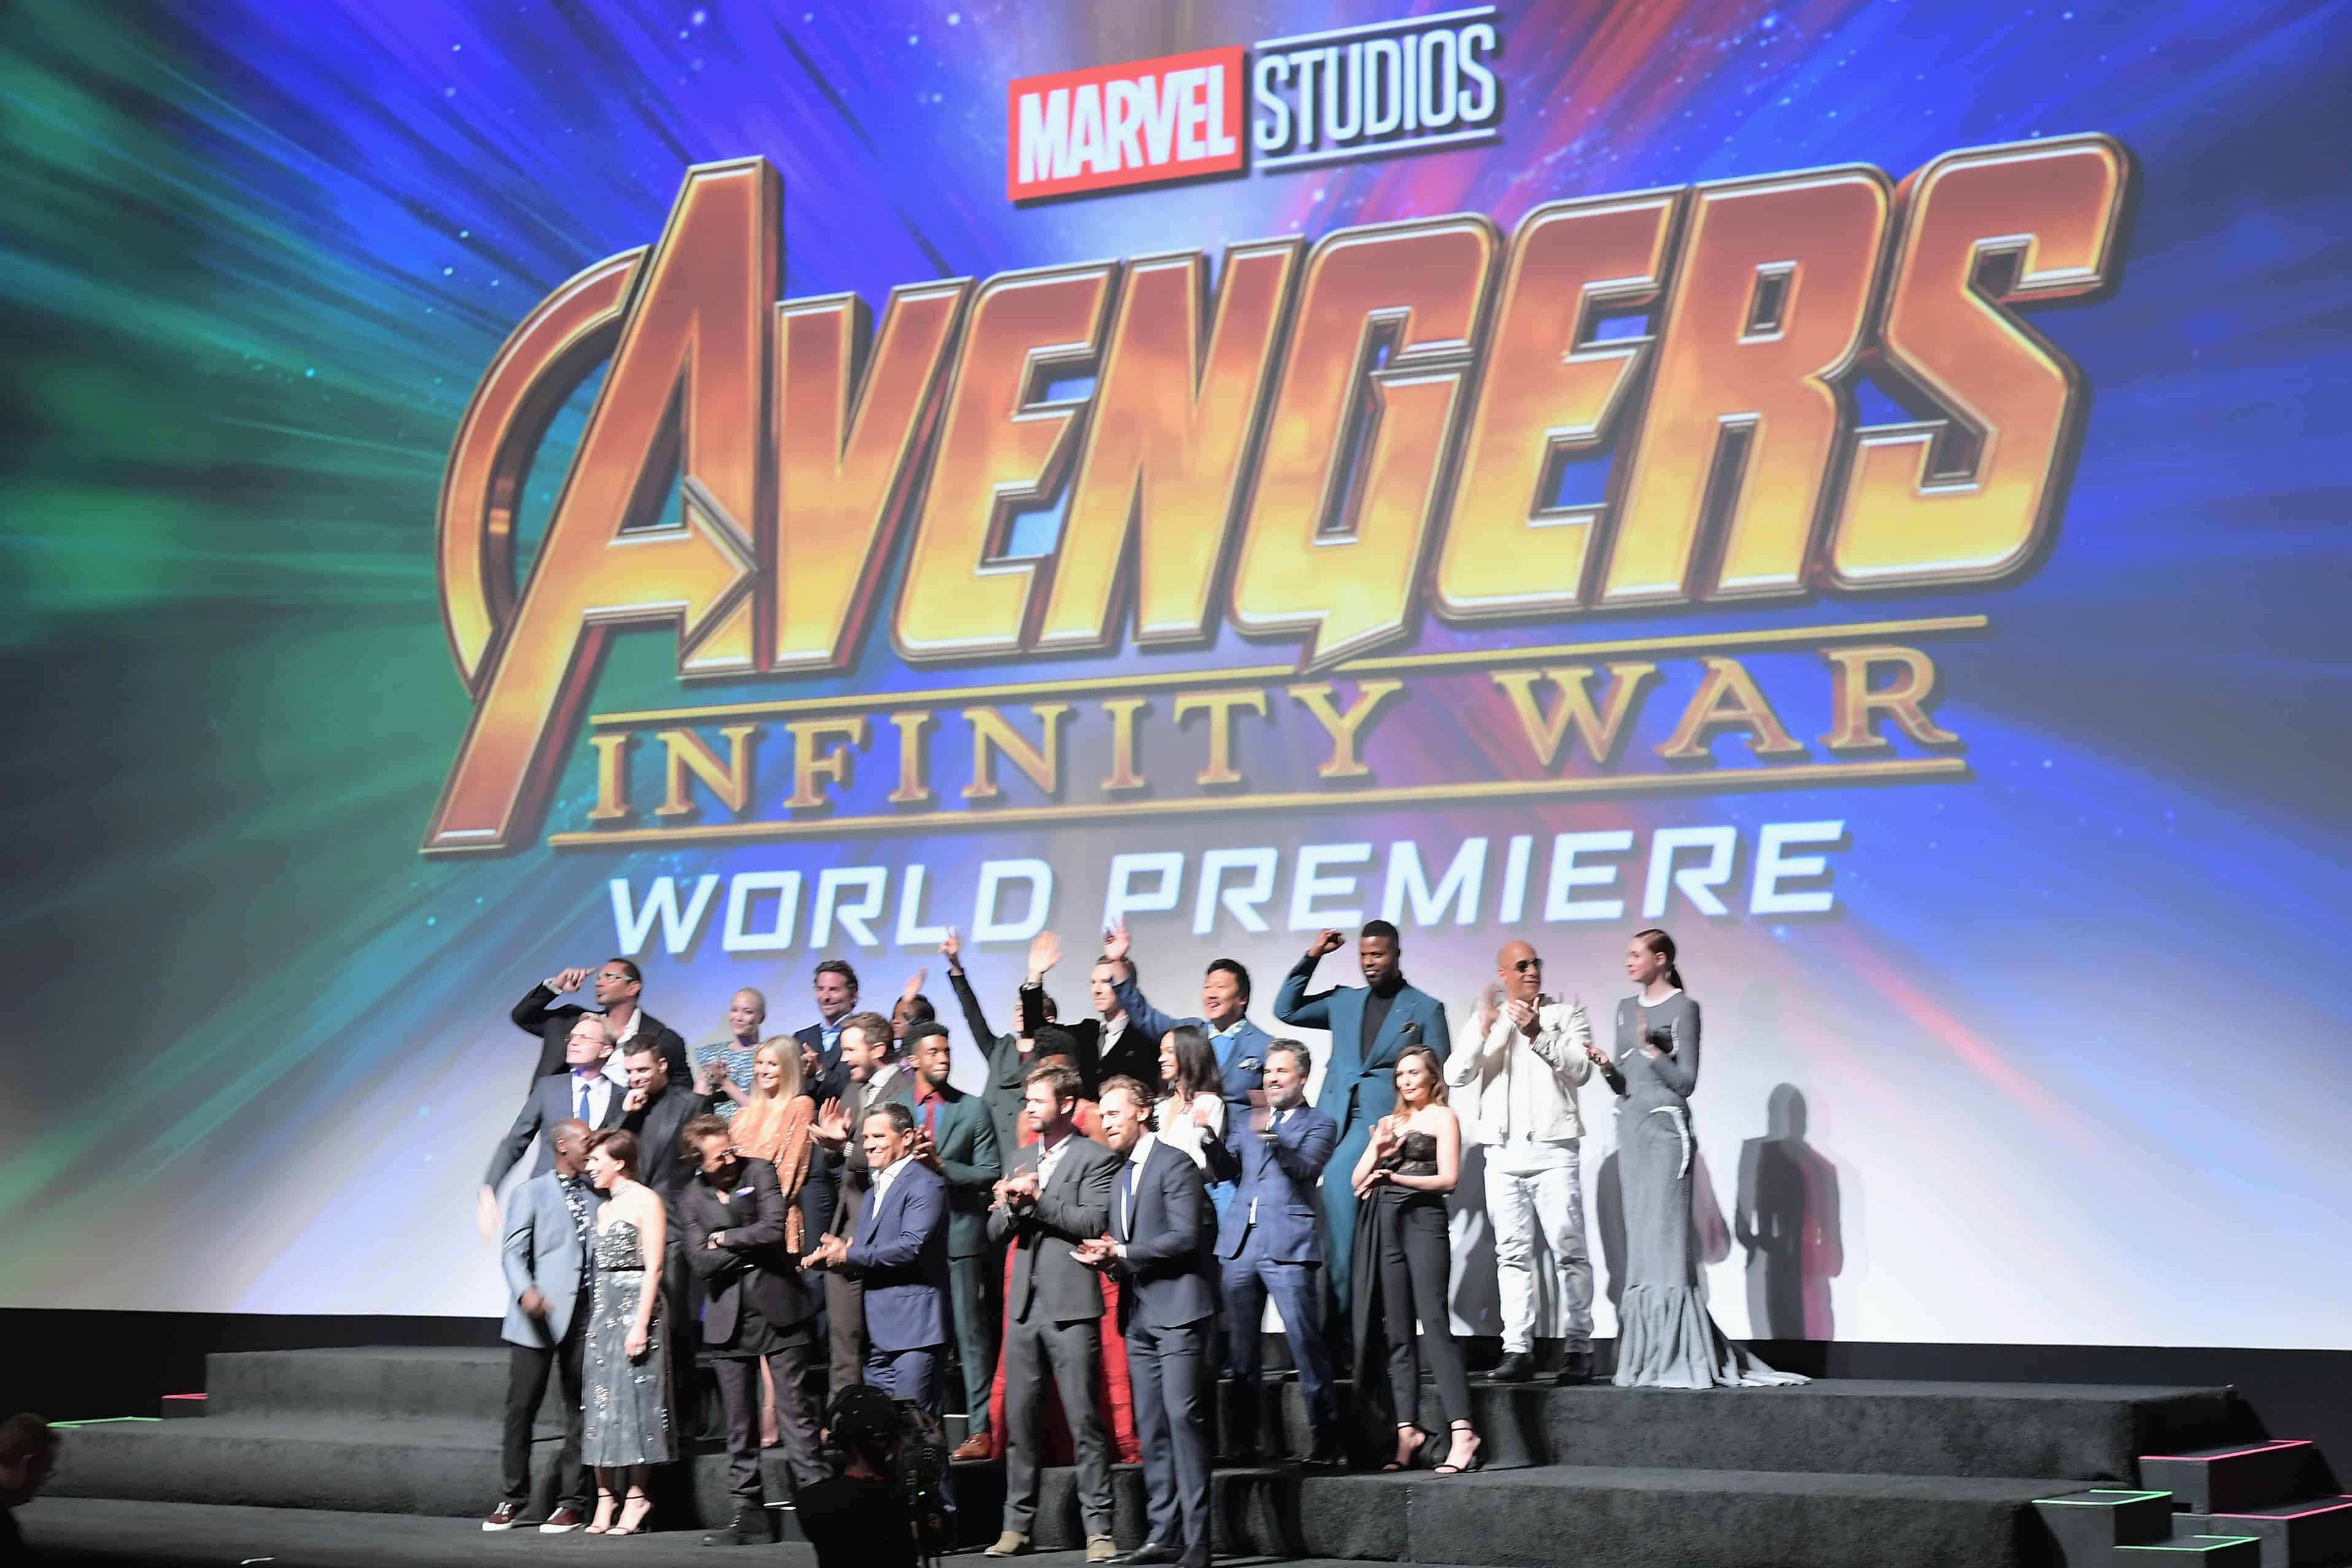 Avengers: Infinity War review - A Parent's Honest Opinion